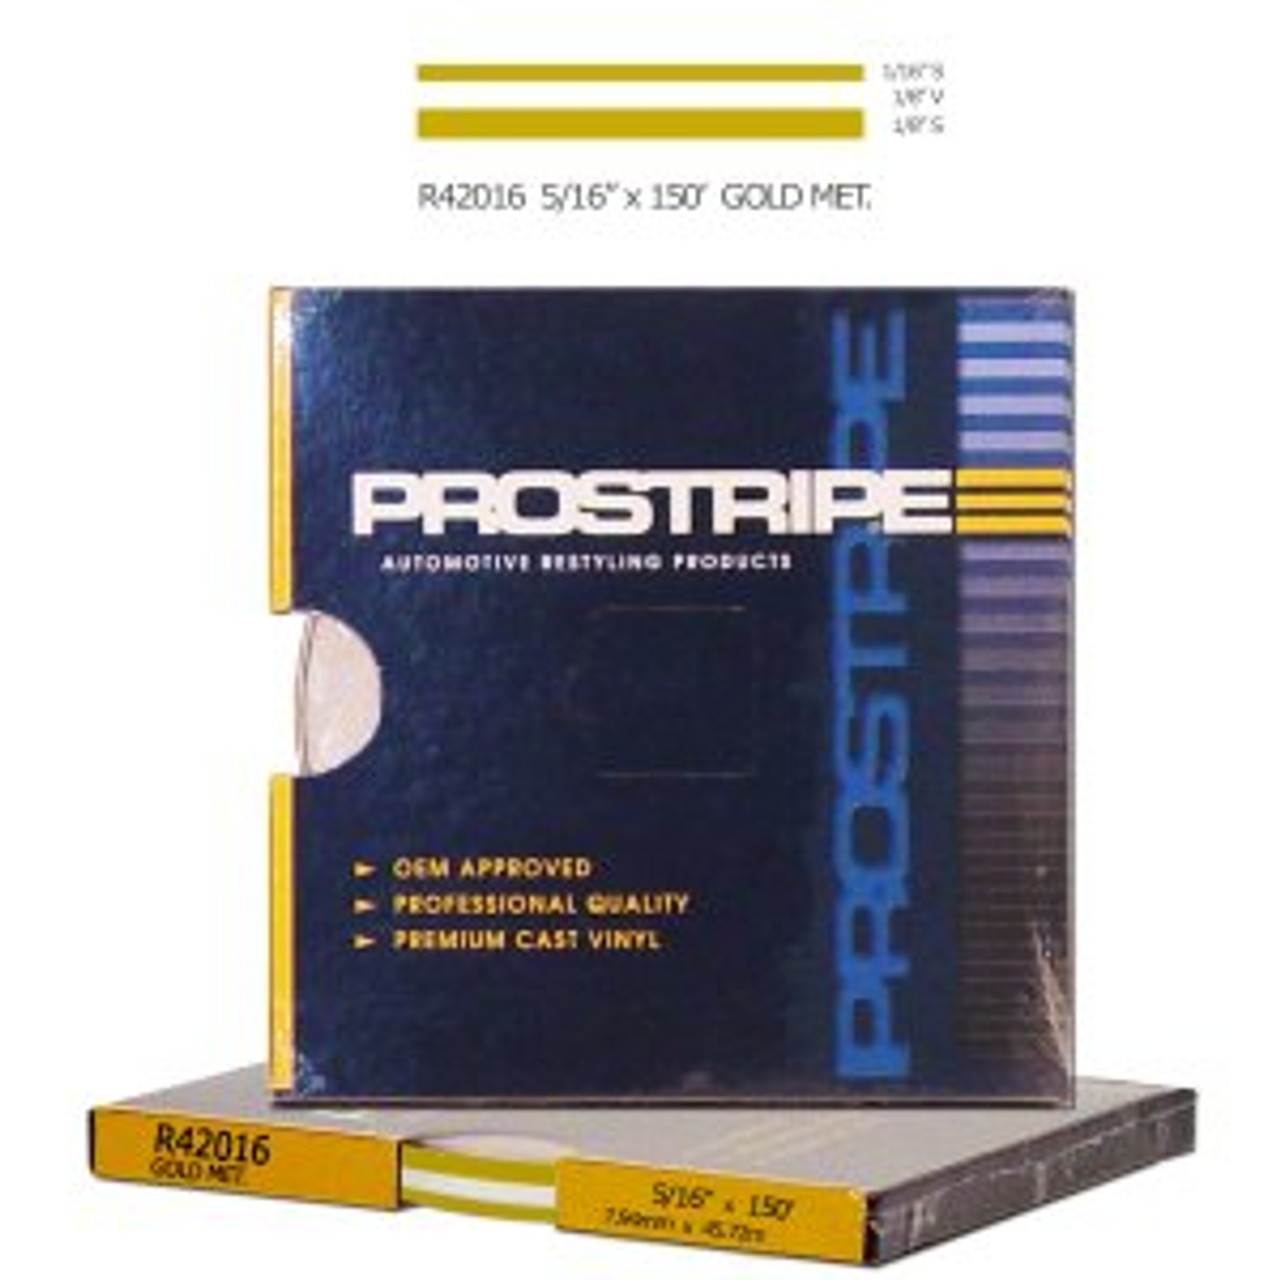 Prostripe R42016 Gold Metallic Vinyl Pinstriping Tape 5/16" x 150'